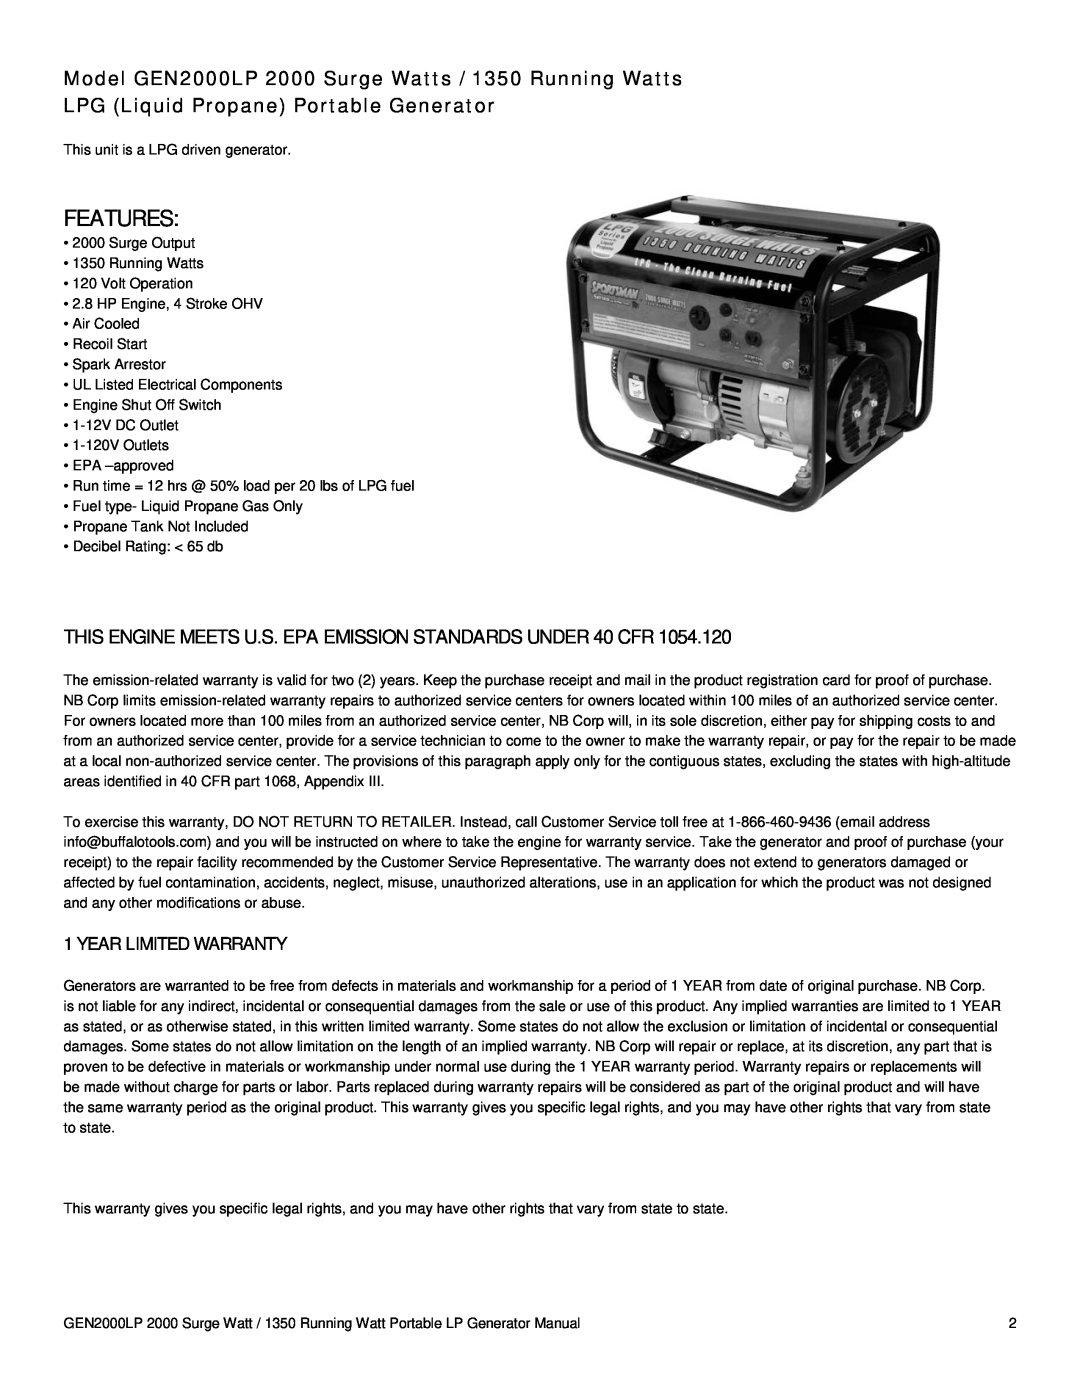 Buffalo Tools GEN2000LP instruction manual Features, LPG Liquid Propane Portable Generator, Year Limited Warranty 